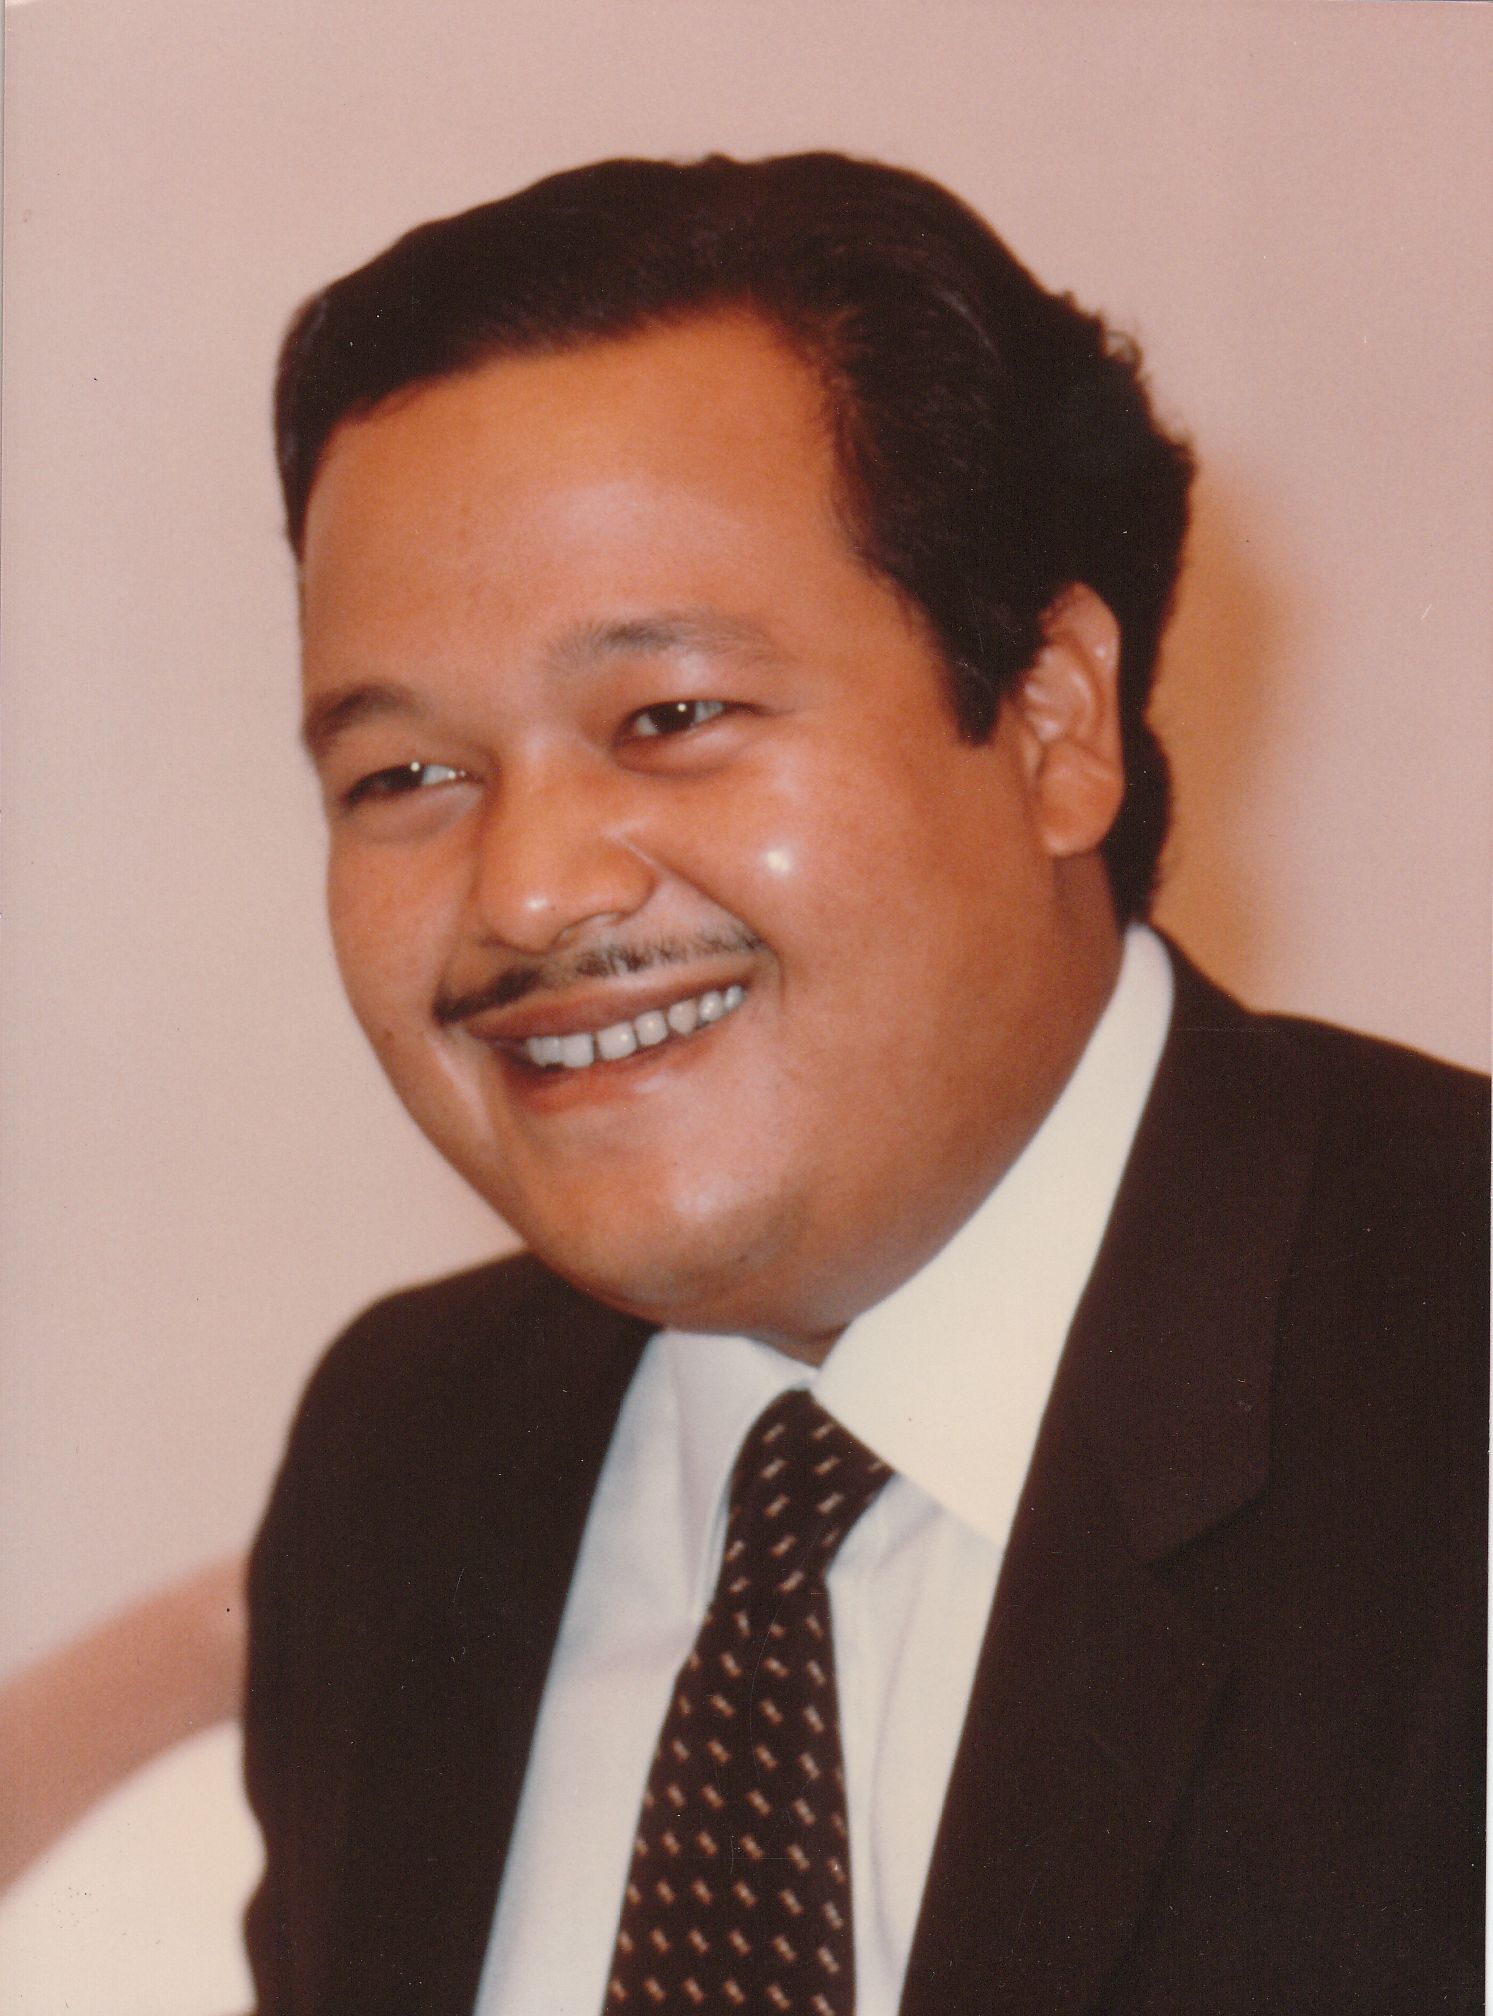 Prem Rawat (Maharaji) Photo in Suit And Tie circa 1980